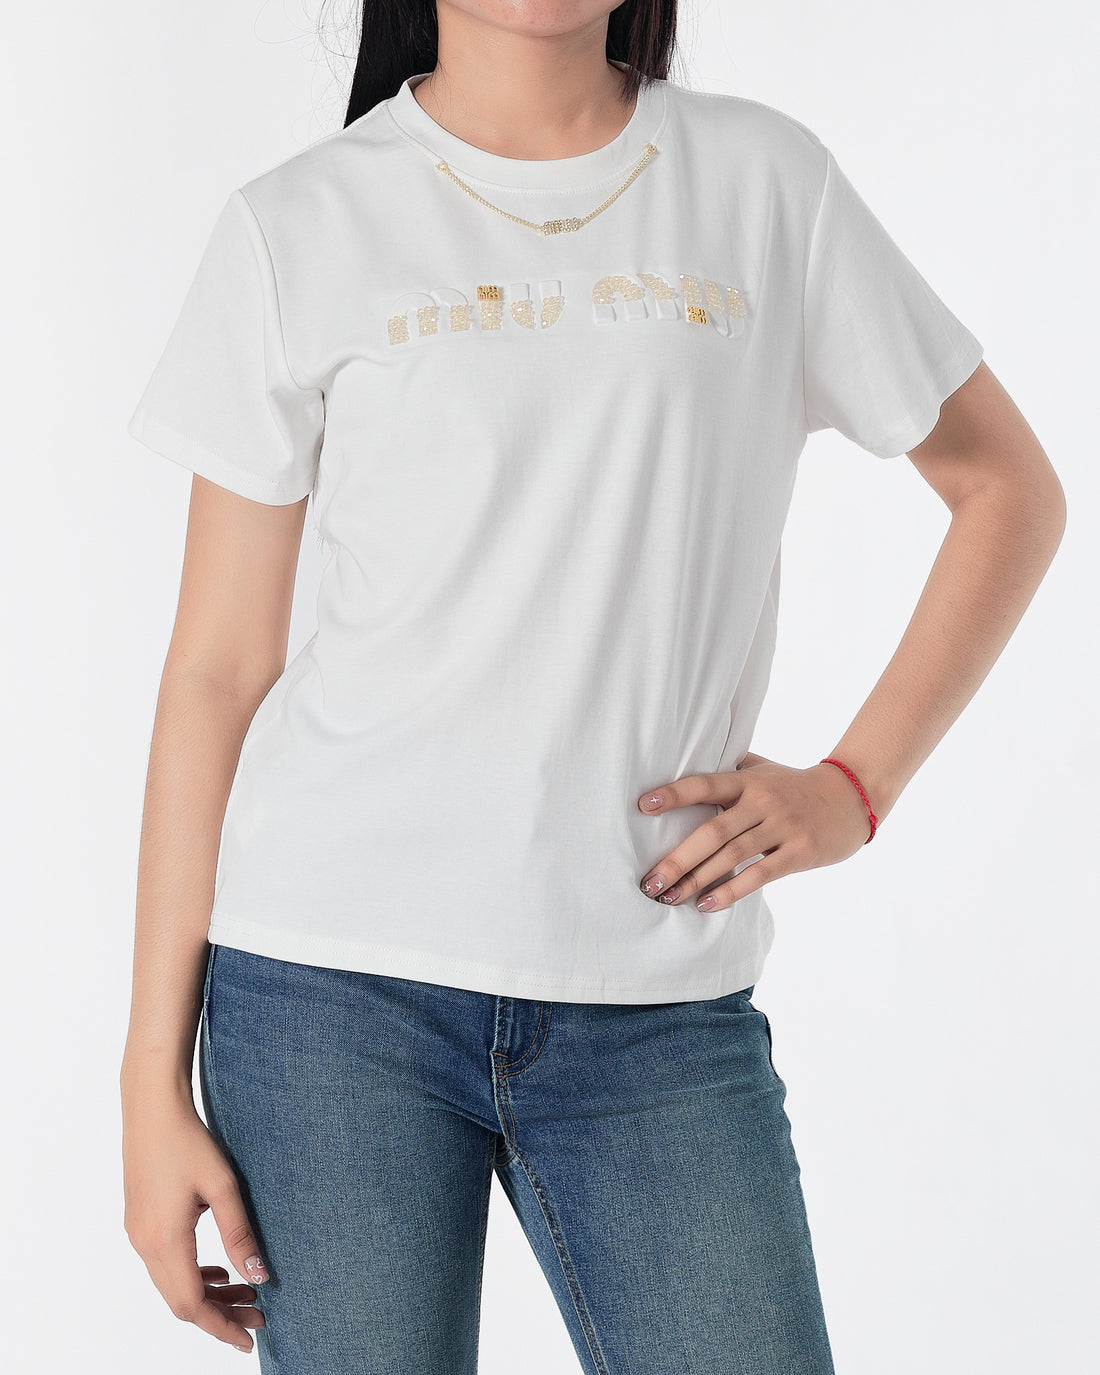 MIU Rhinestone Neck Chain Lady White T-Shirt 27.90